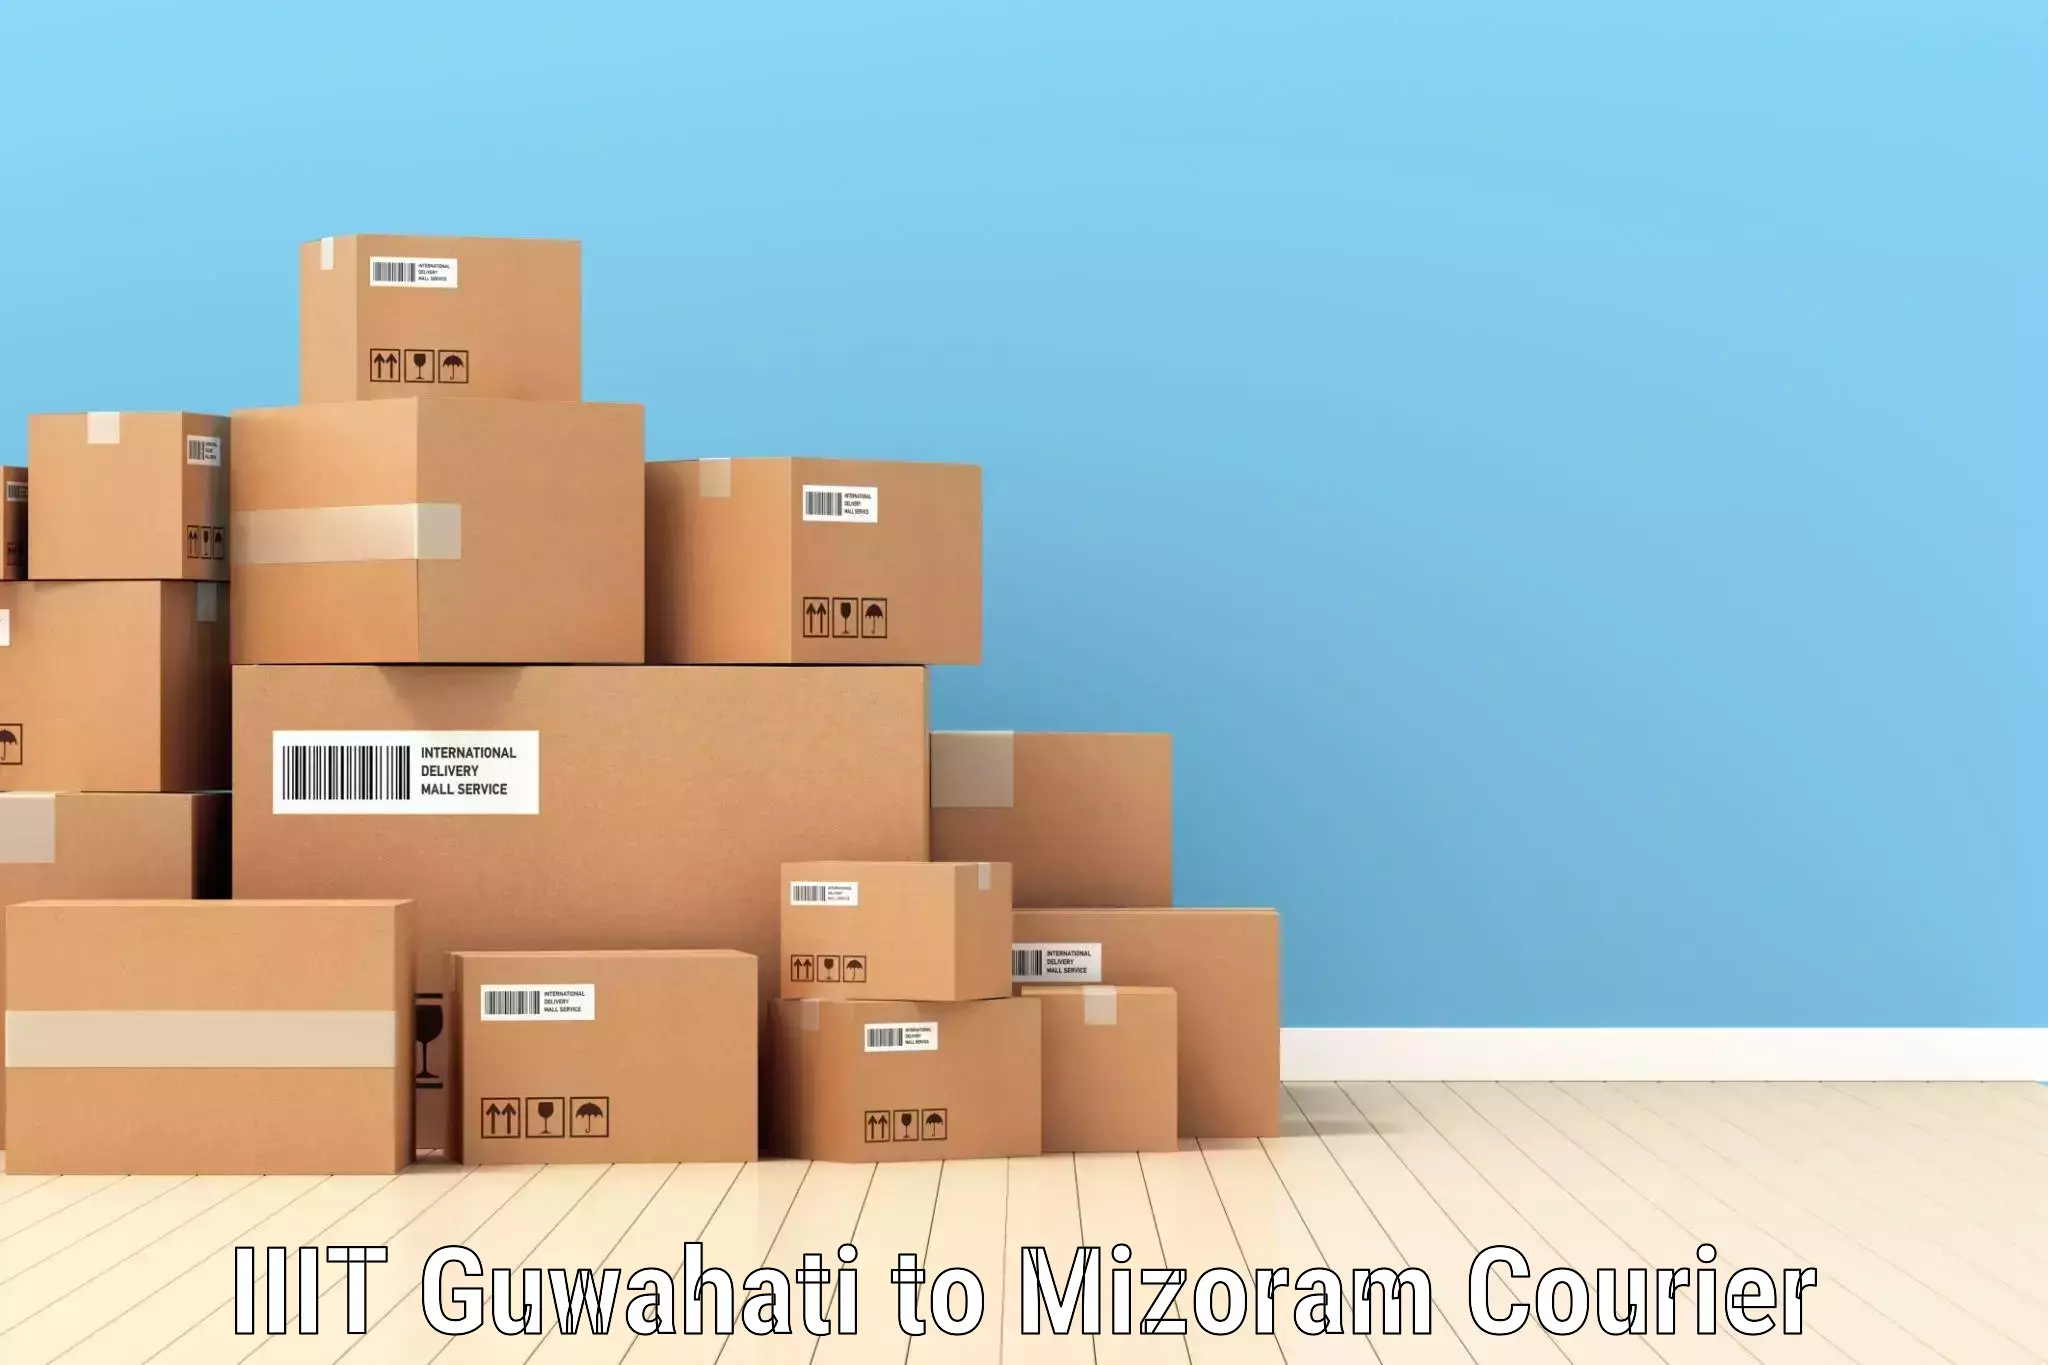 Courier service partnerships IIIT Guwahati to Mizoram